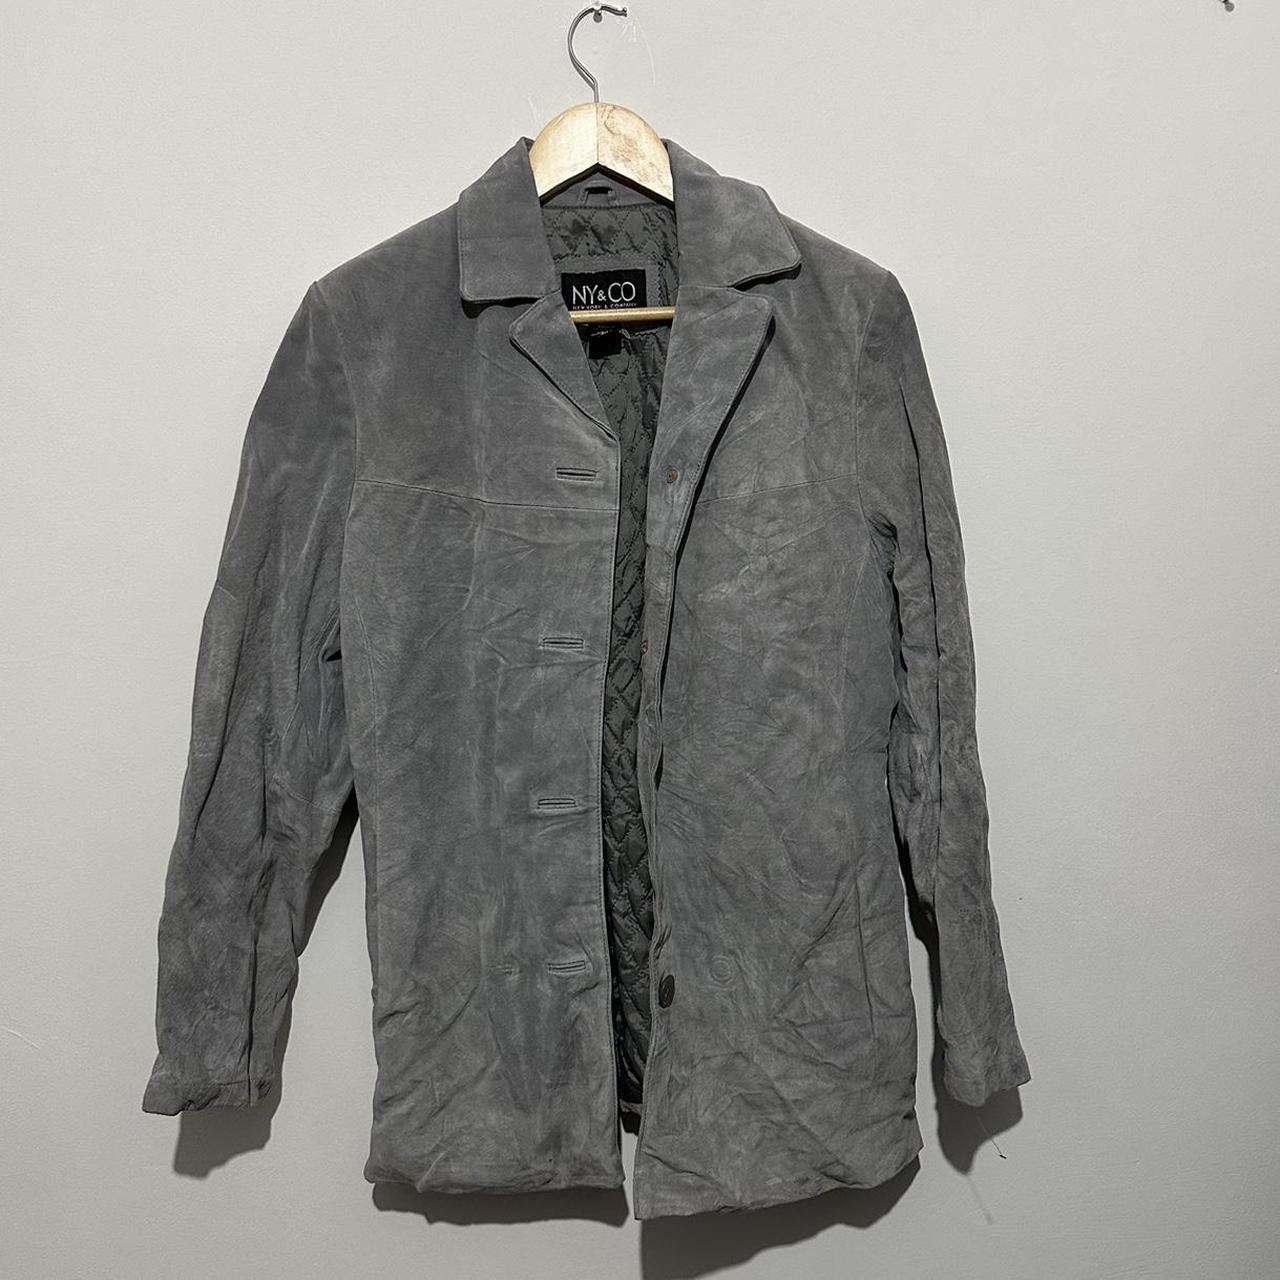 Vintage suede grey jacket #vintage #jacket - Depop